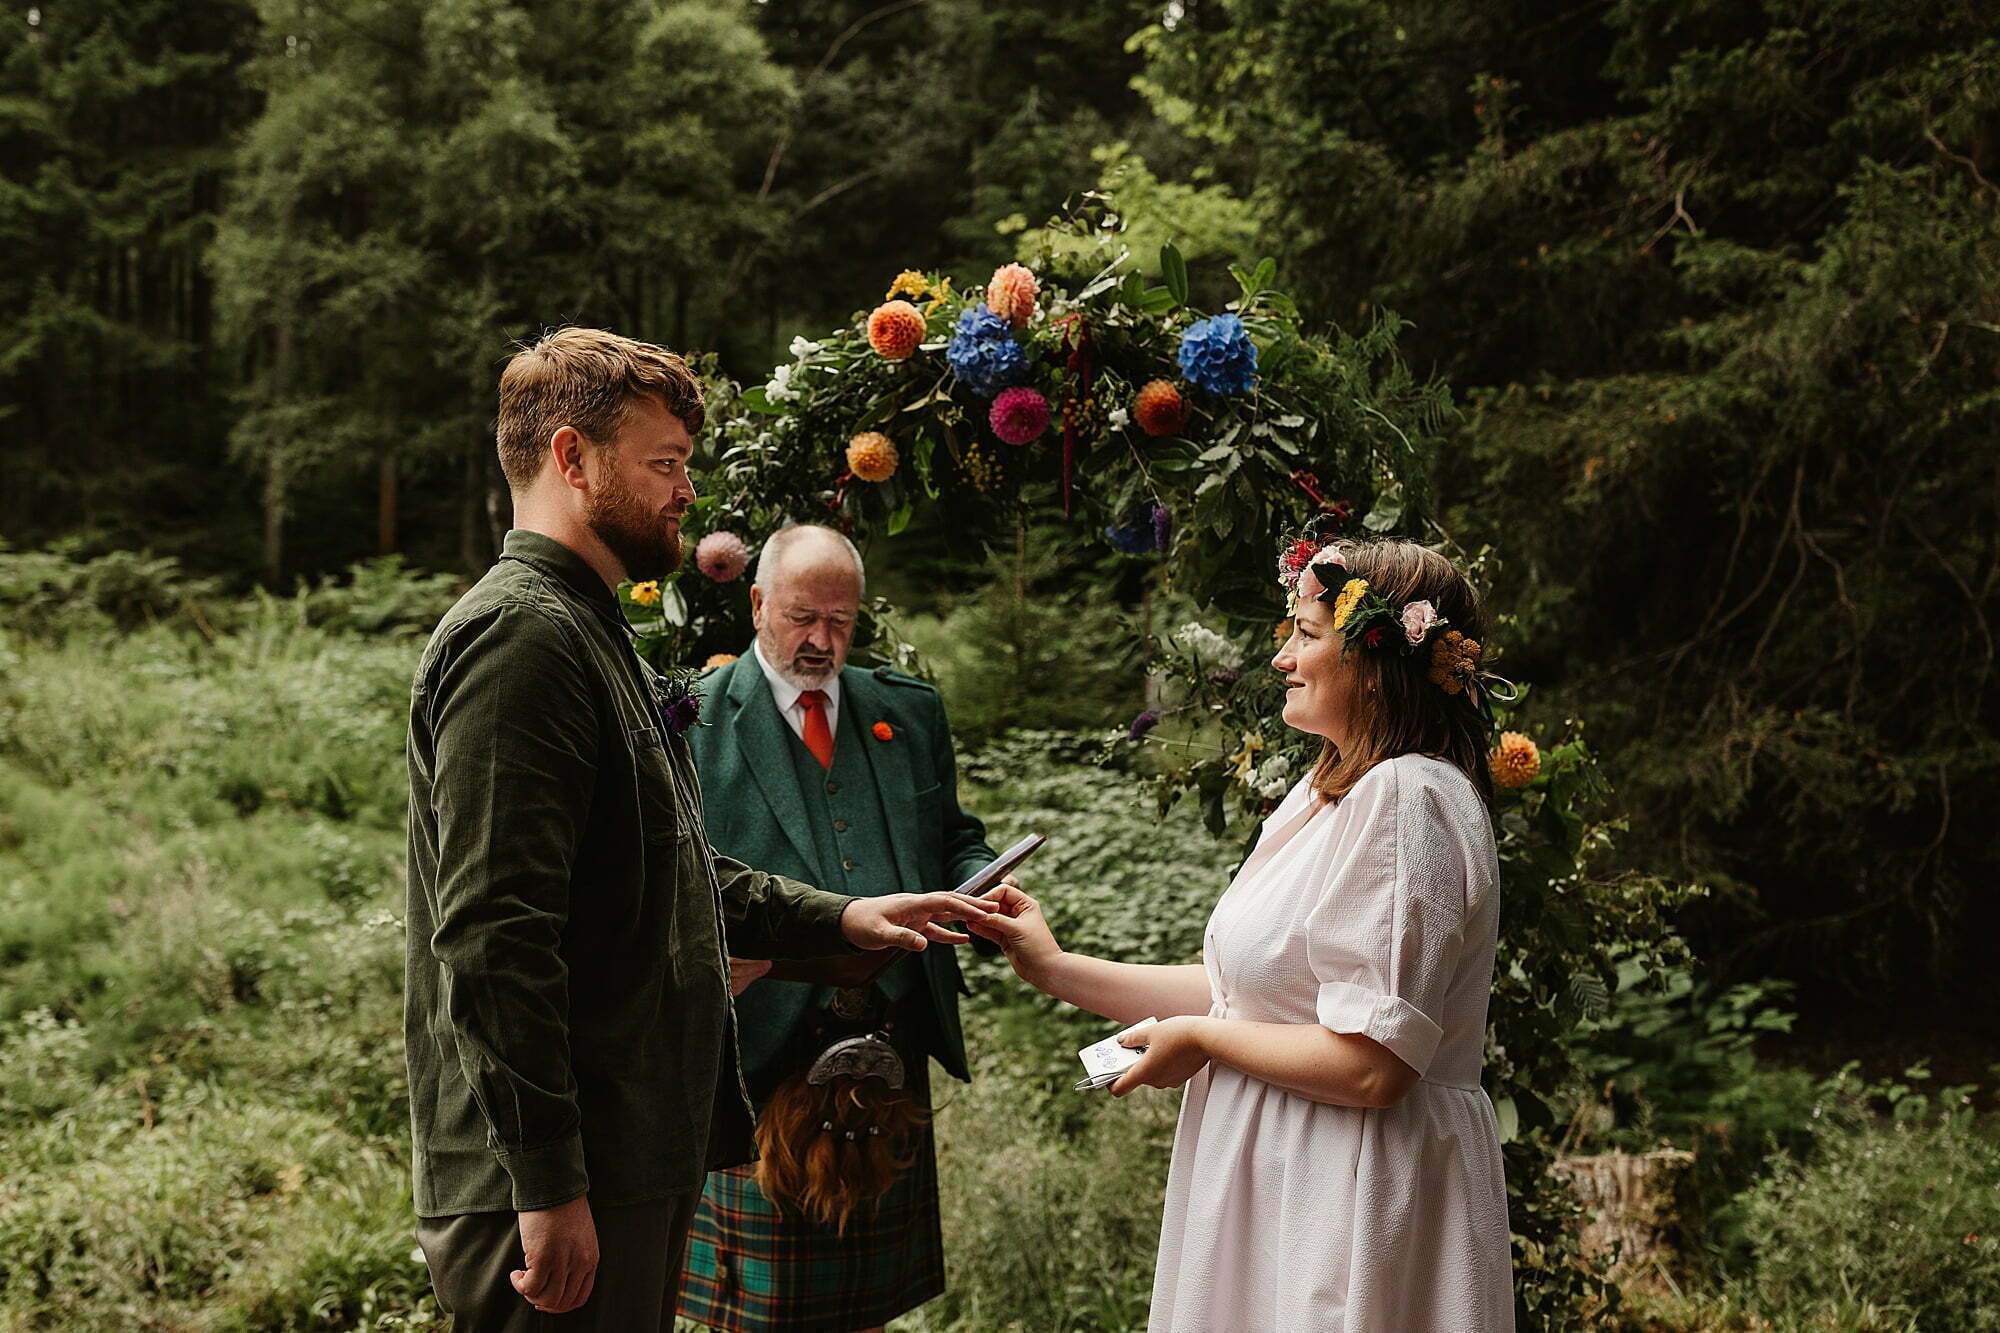 glen dye outdoor ceremony humanist wedding ring exchange hays flowers floral crown neil lynch celebrant